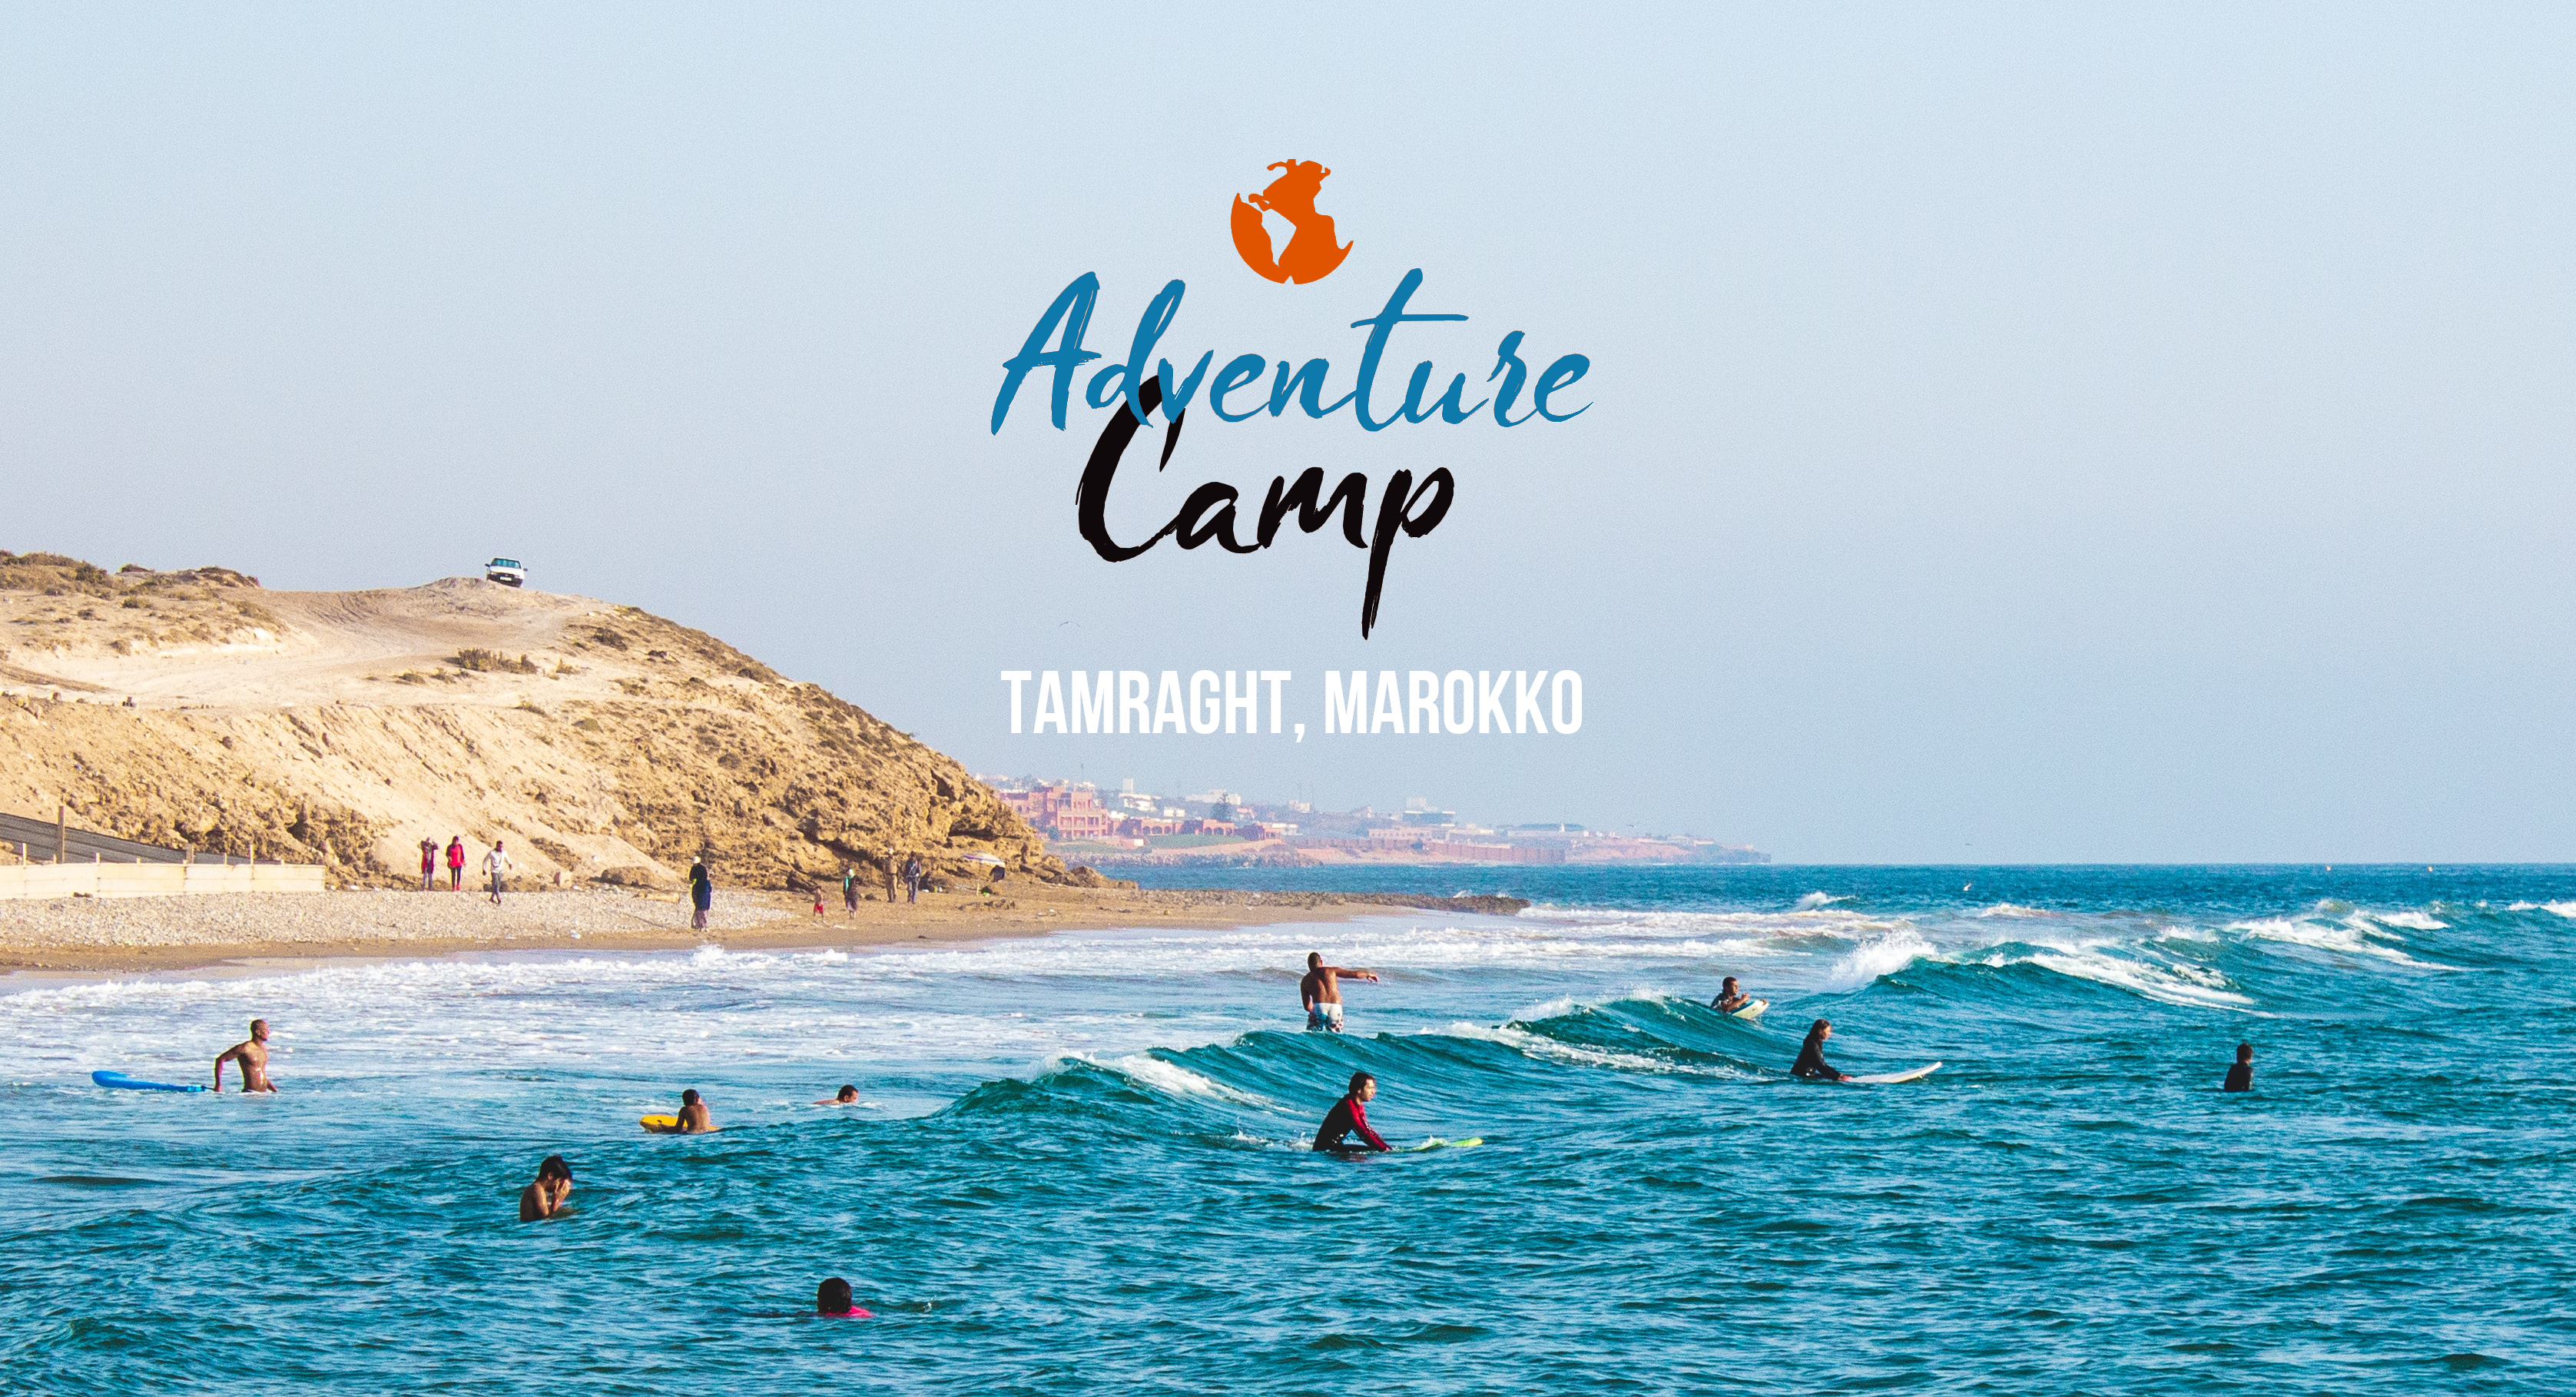 Adventure Camp Tamraght, Marokko